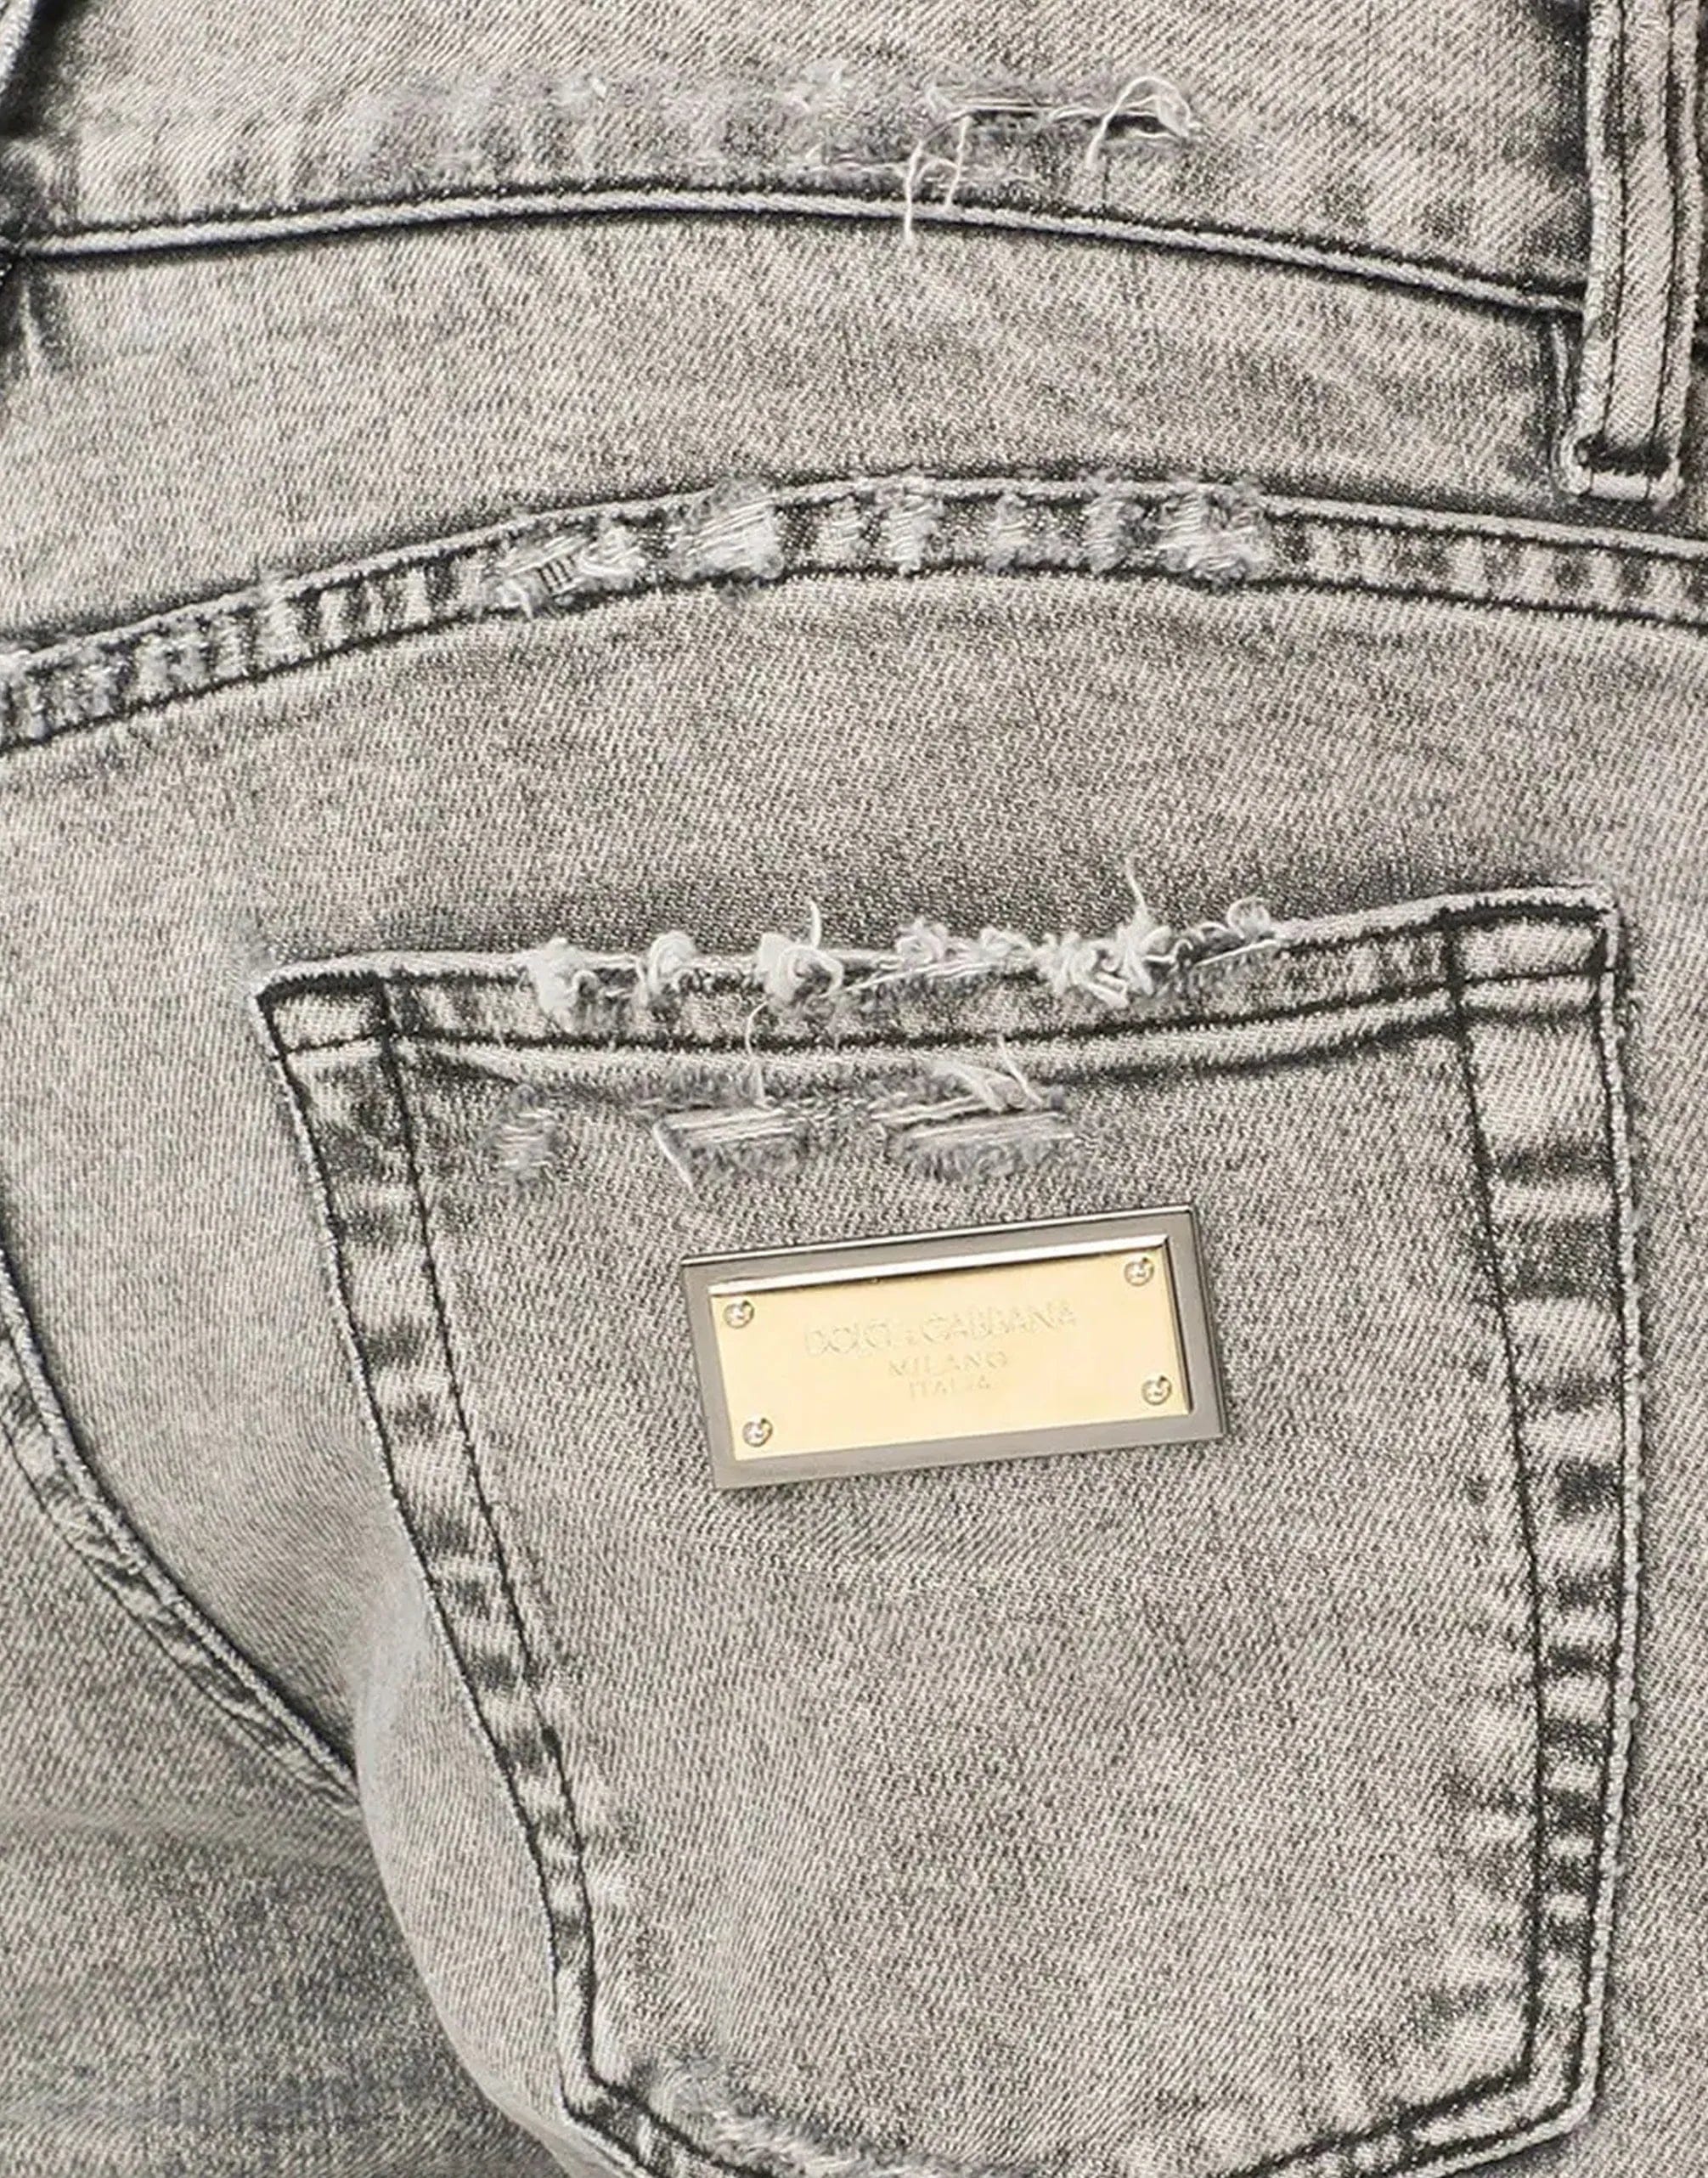 Dolce & Gabbana Low-Rise Skinny Jeans